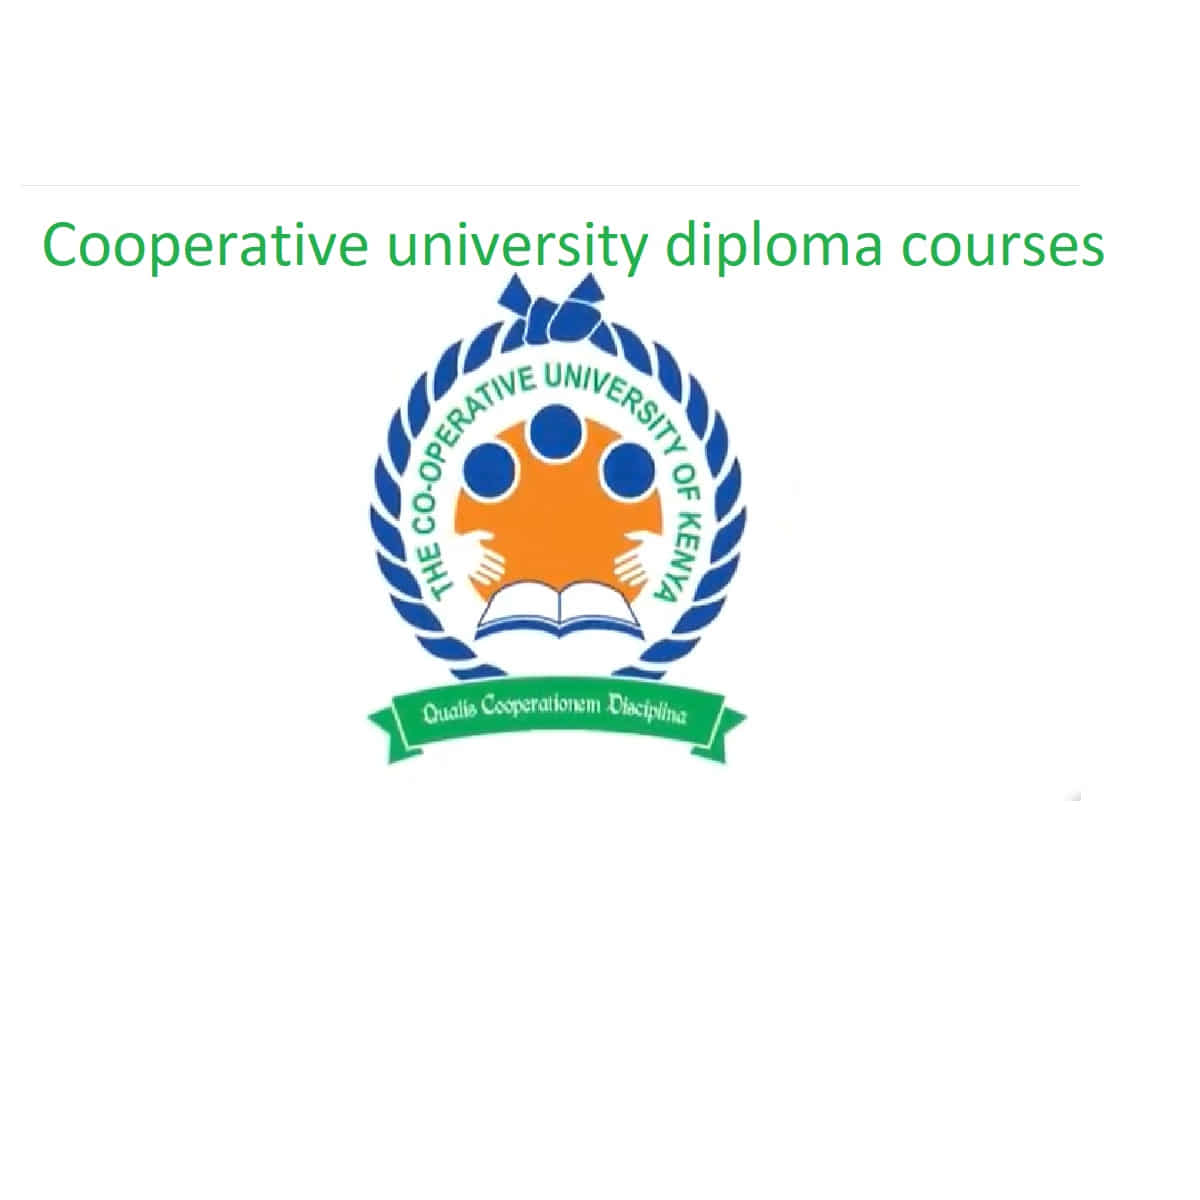 Cooperative university diploma courses